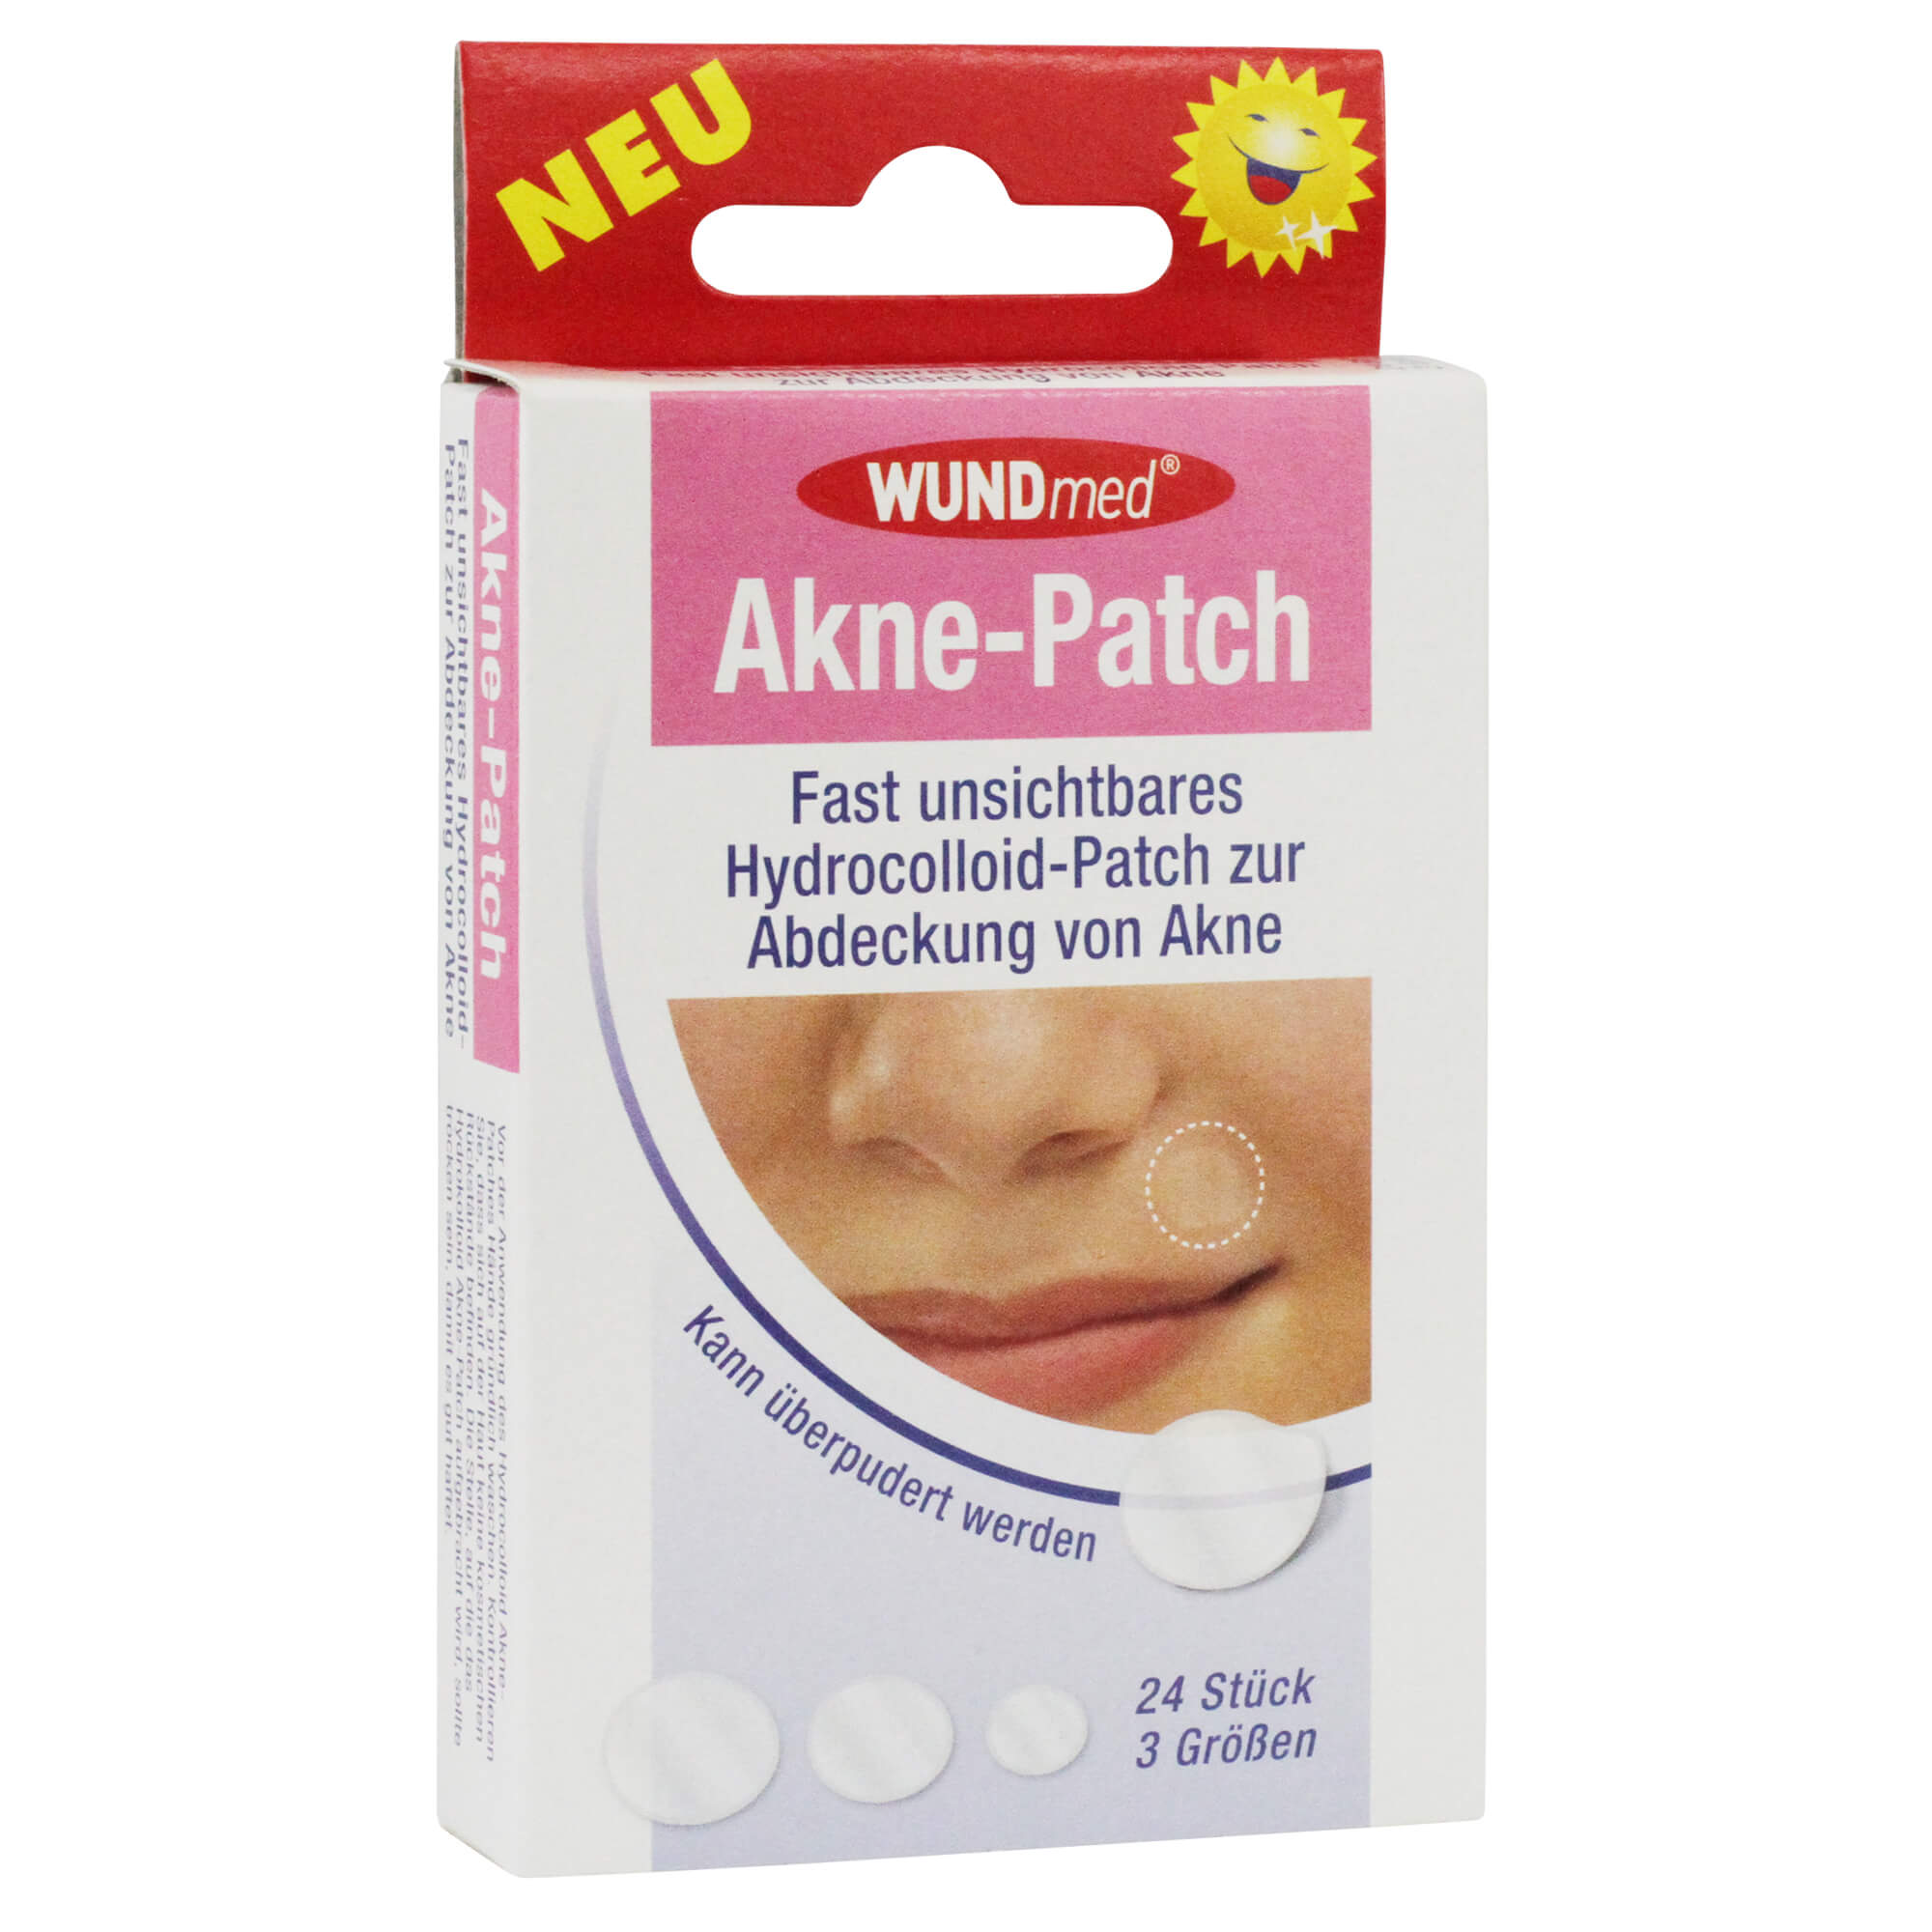 WUNDmed® Akne-Patch 24 Stück/Packung